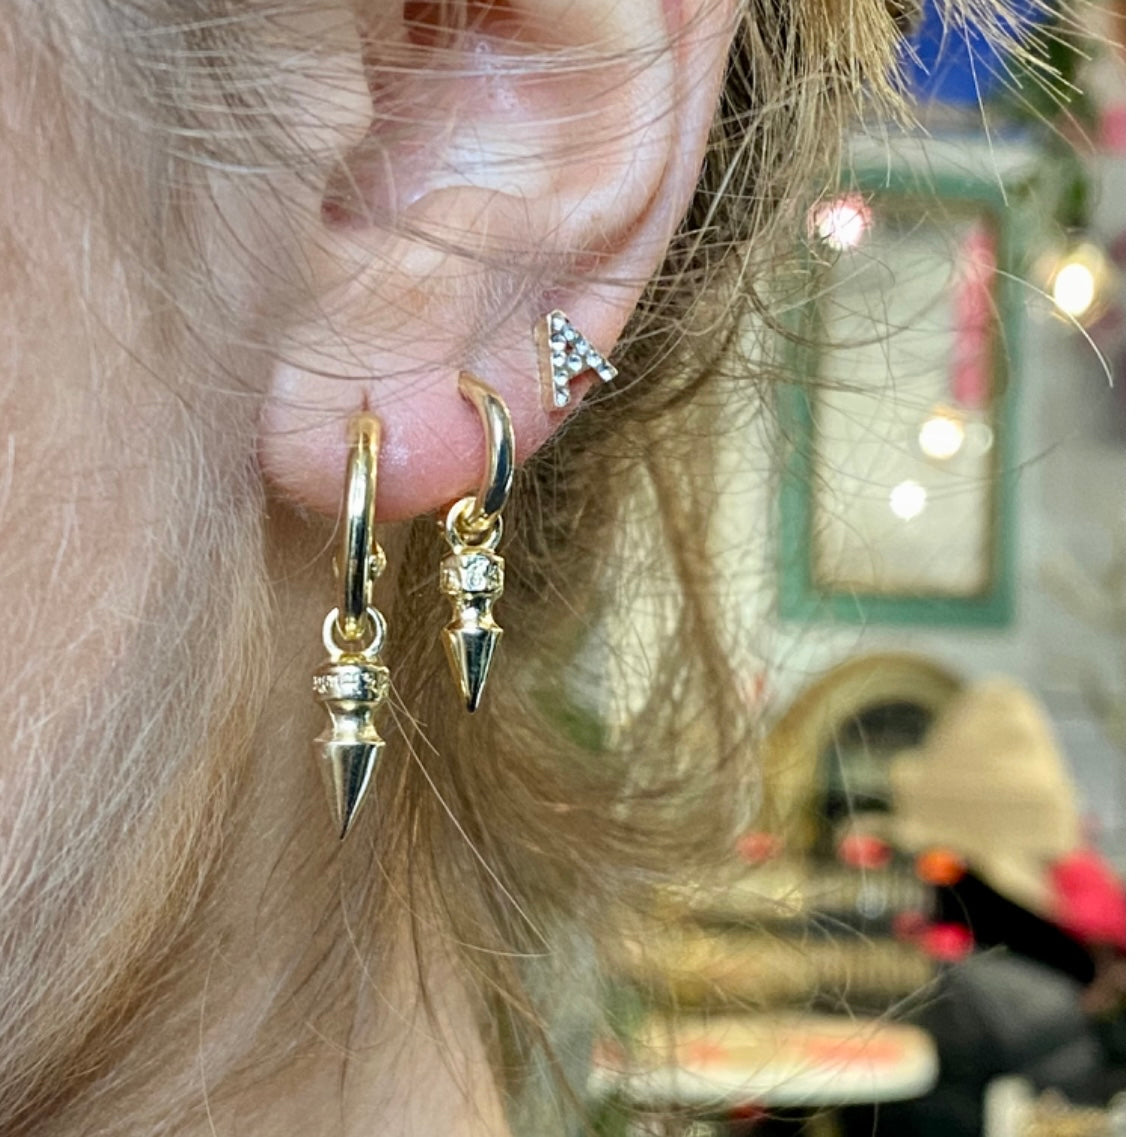 Stud earring with shiny rivet